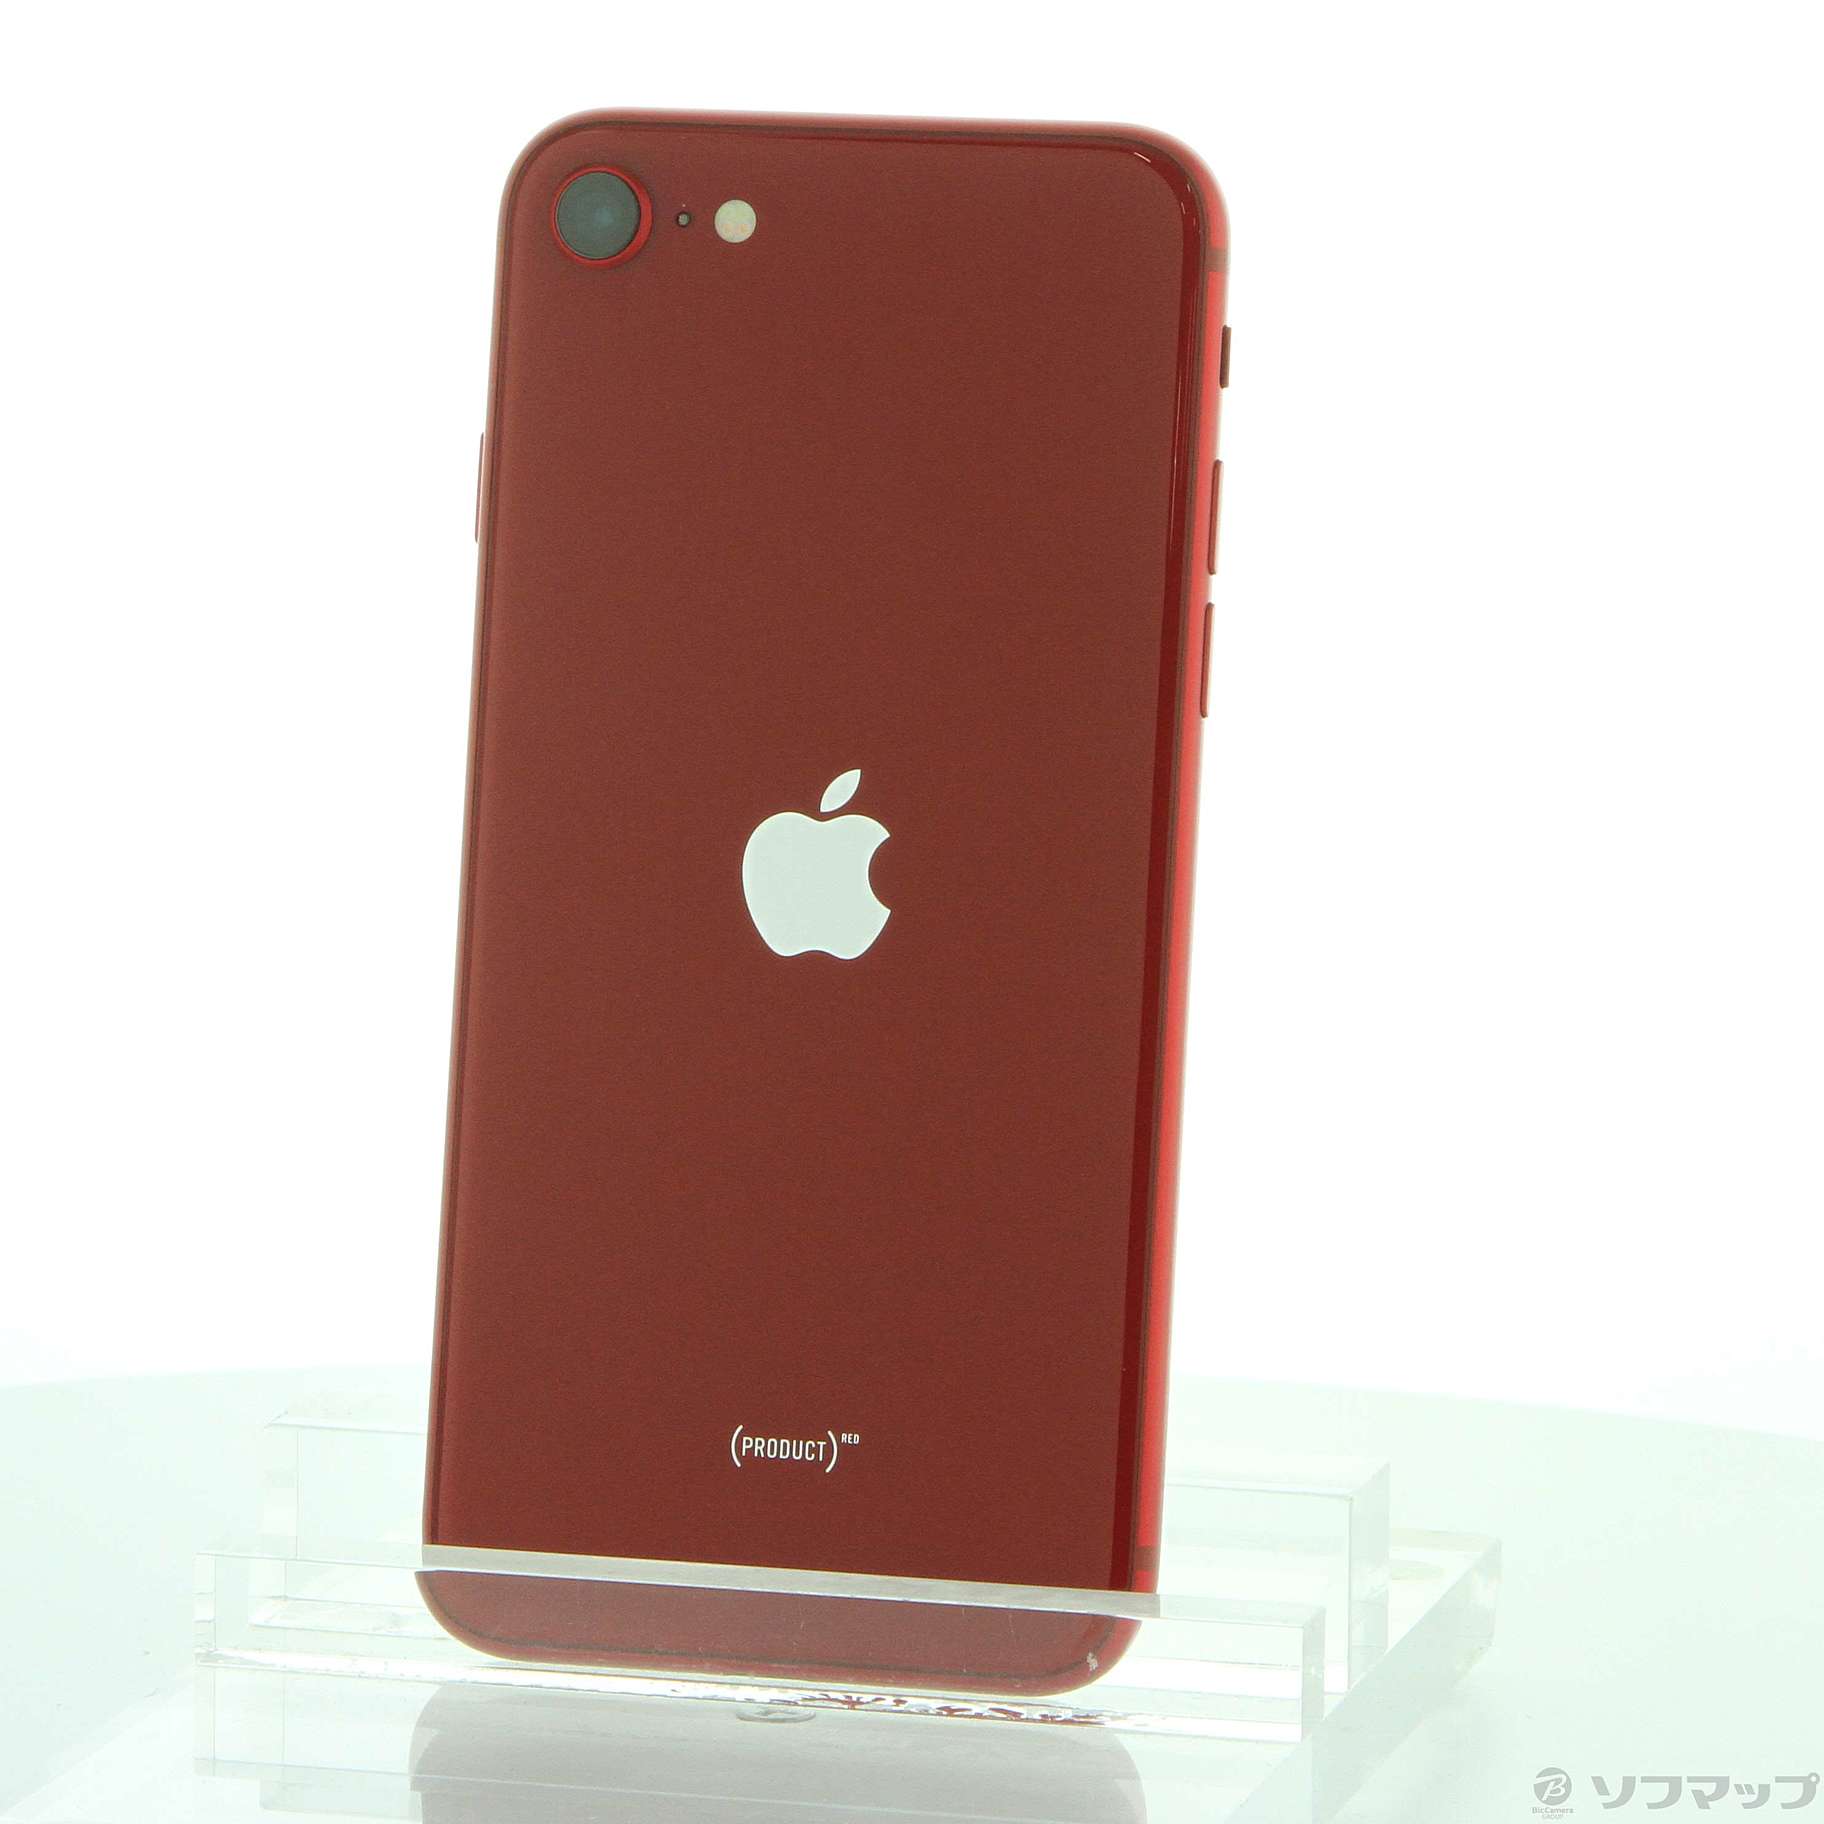 iPhone SE (第3世代) (PRODUCT)RED 256GB SIMフリー [レッド] 中古(白 